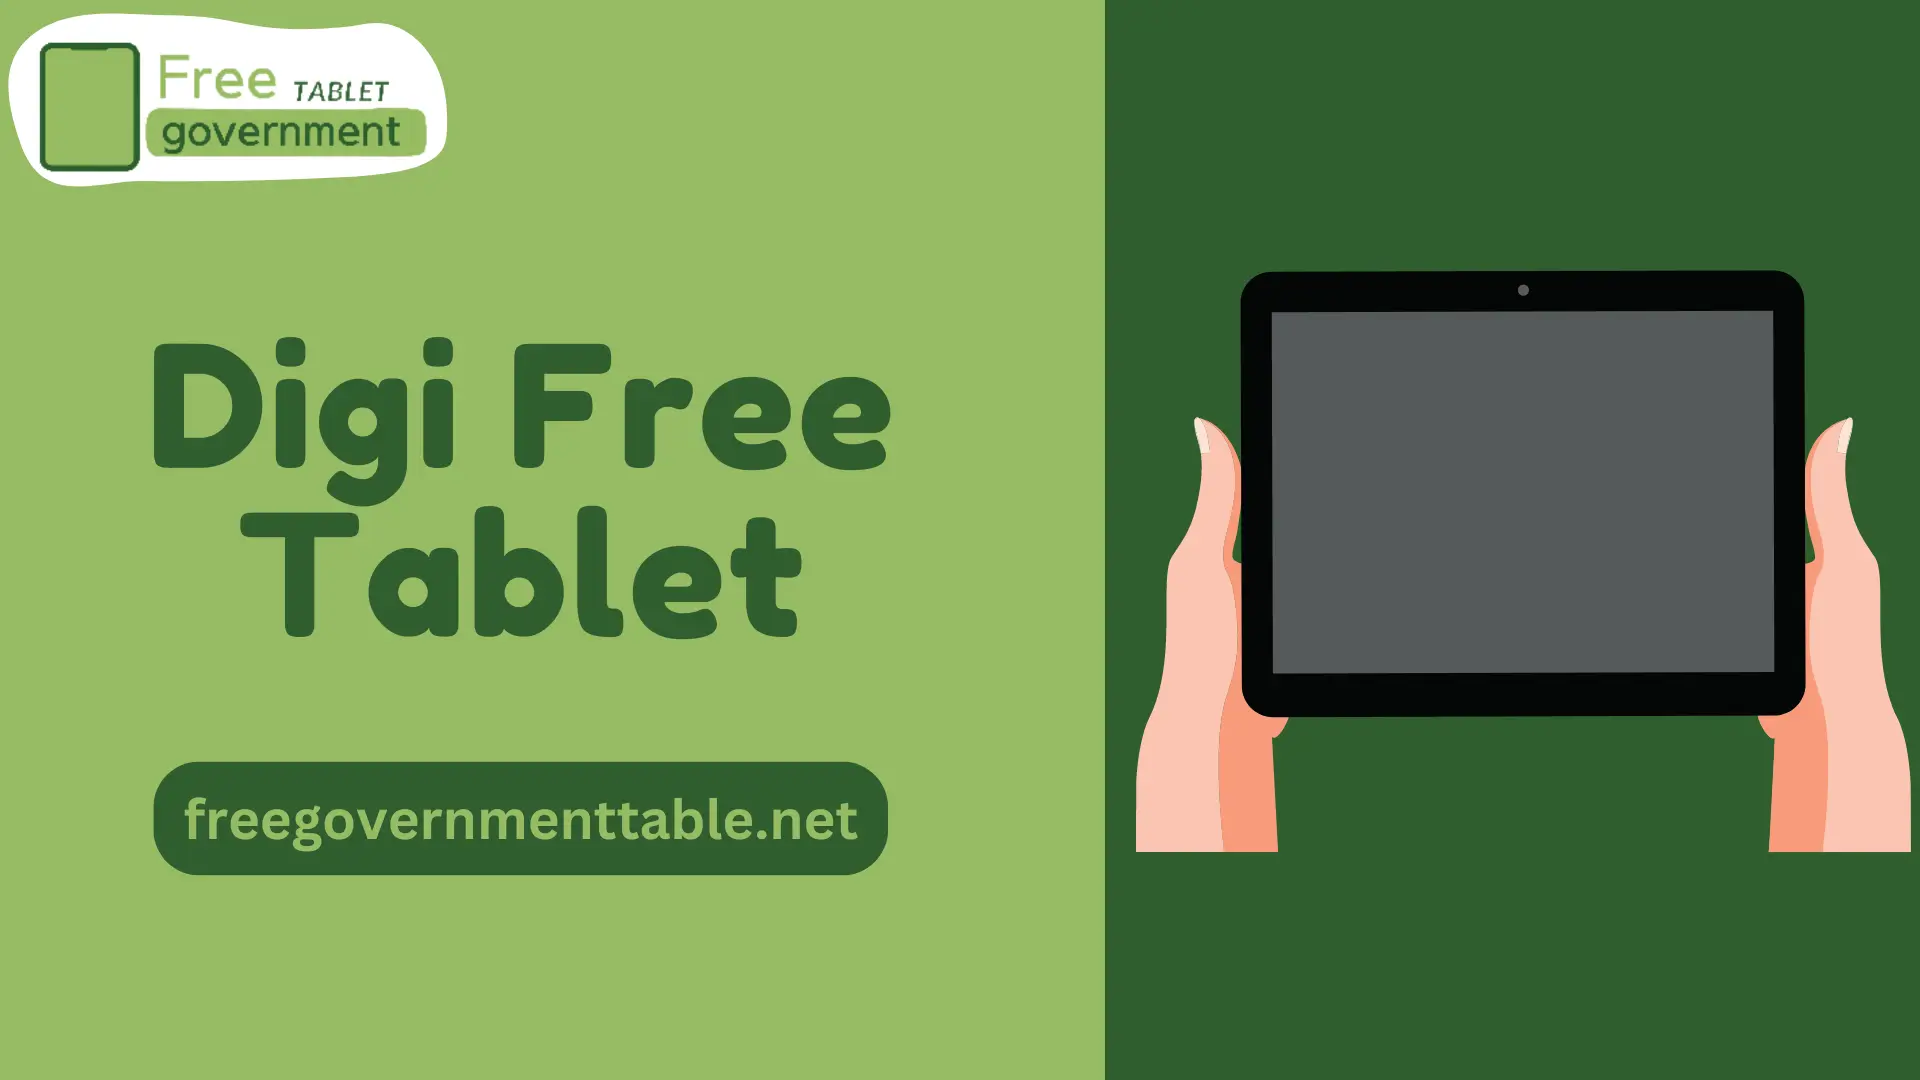 Digi Free Tablet